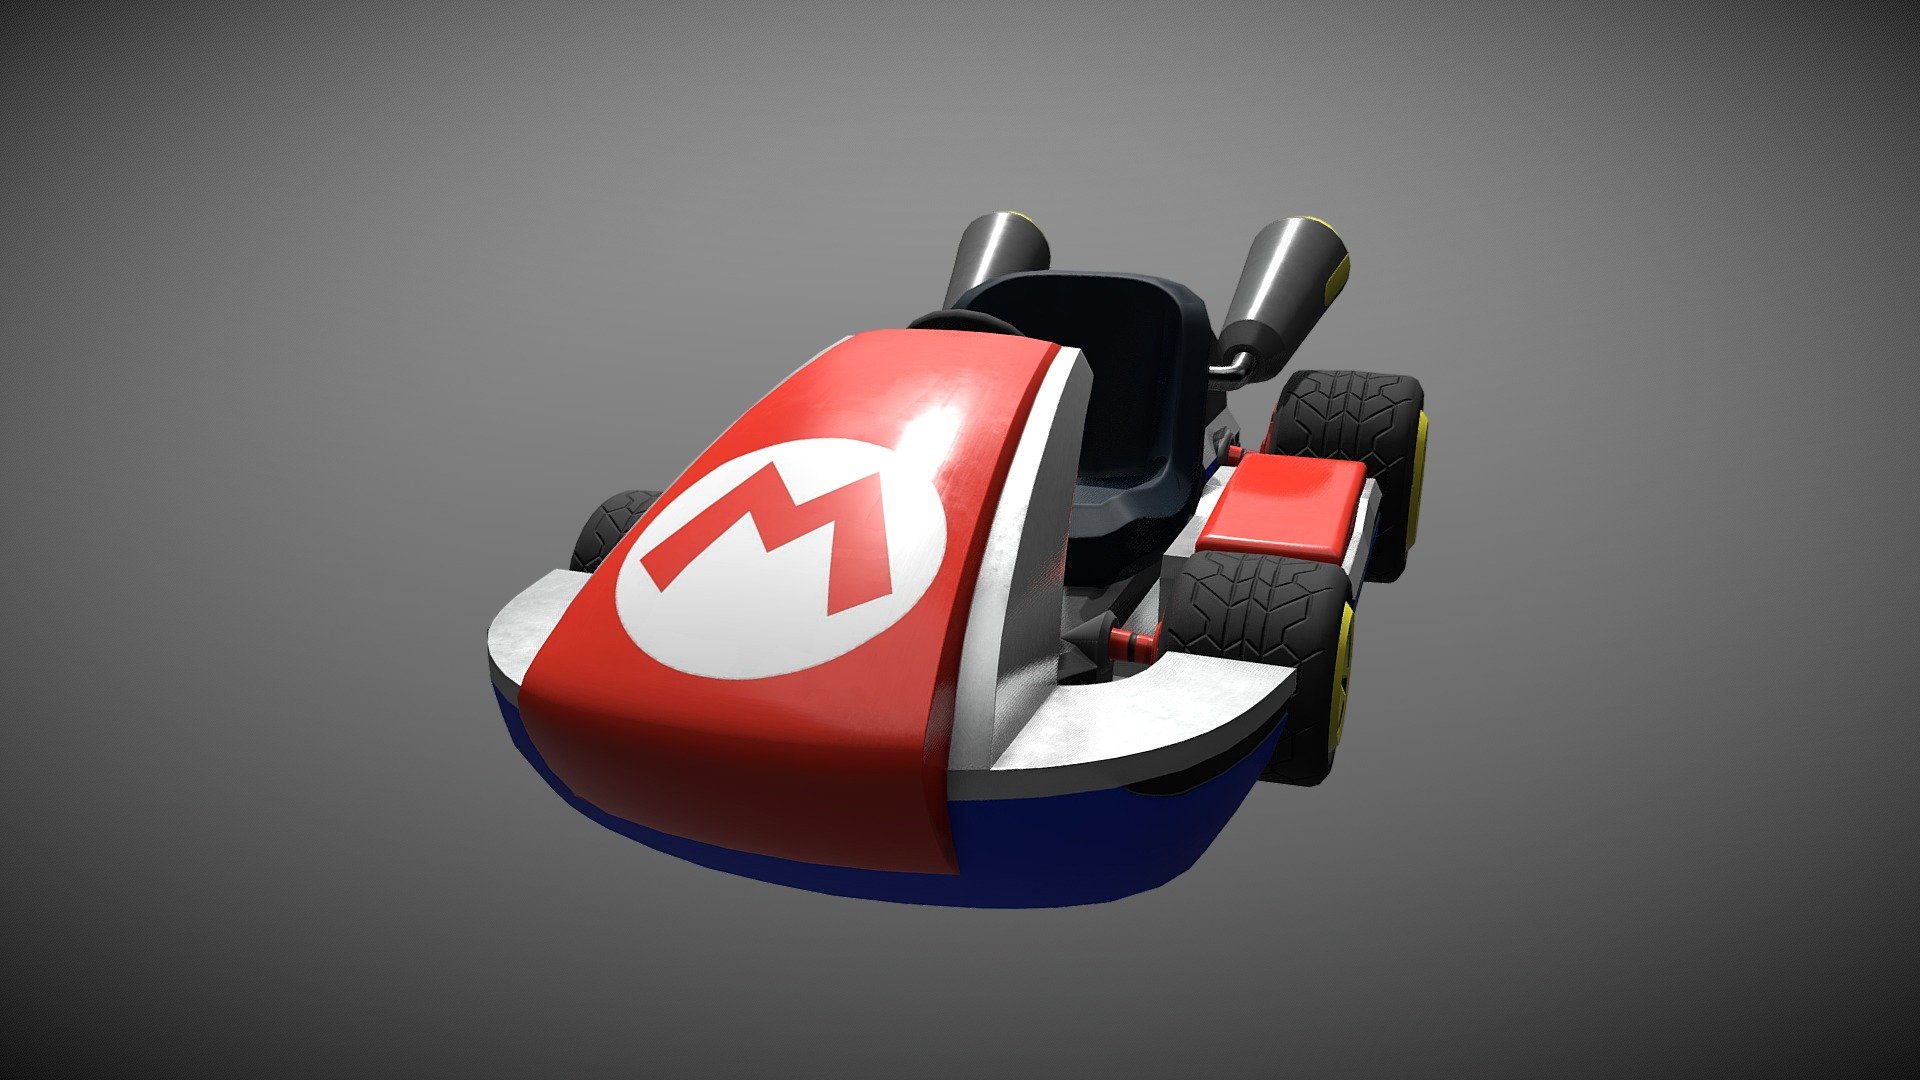 Standard Kart from Mario Kart 8